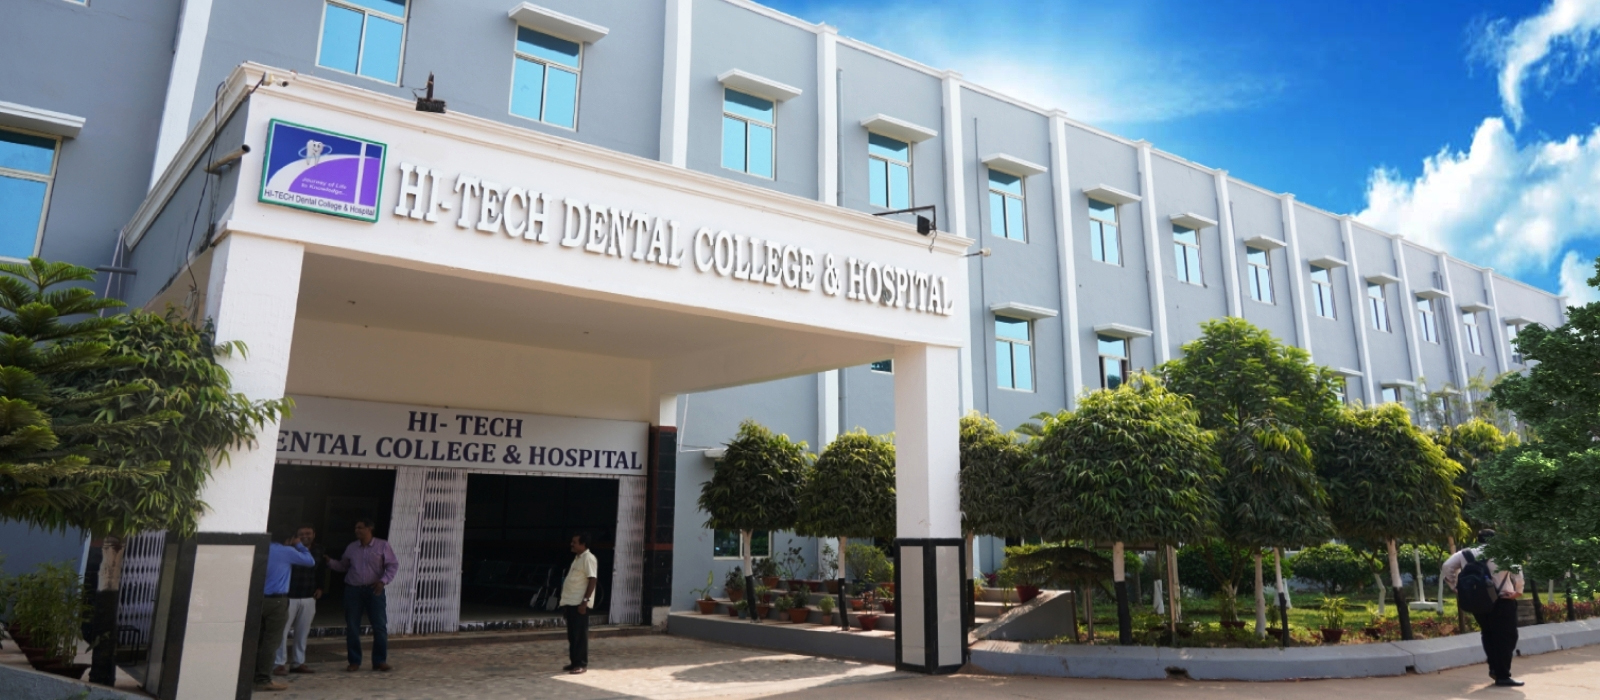 Hi-Tech Dental College & hospital, Bhubaneswar 